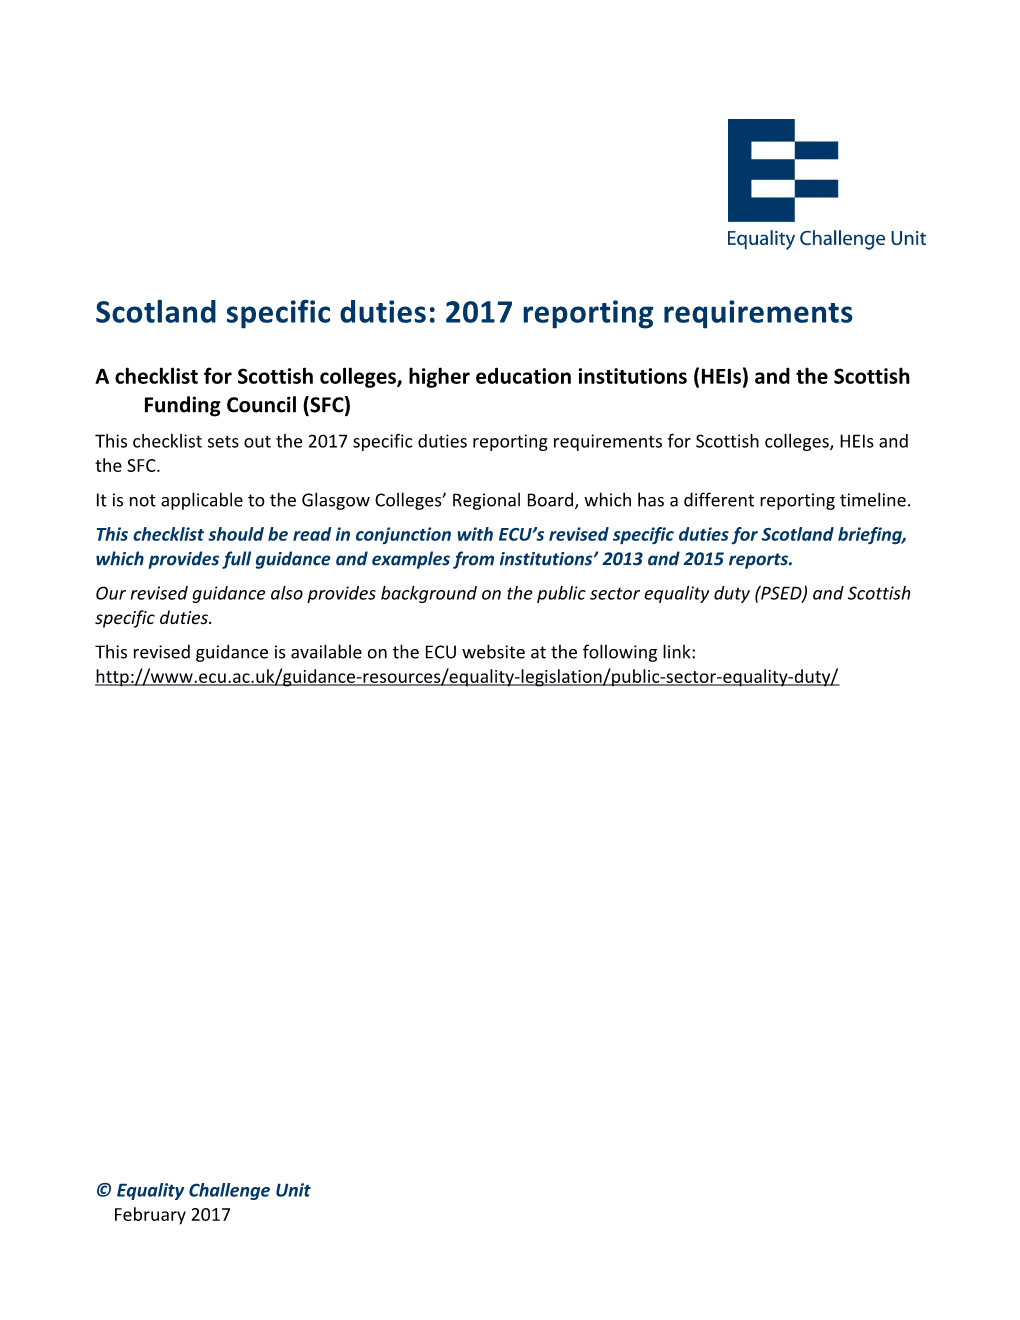 Scotland Specific Duties: 2017 Reporting Requirements